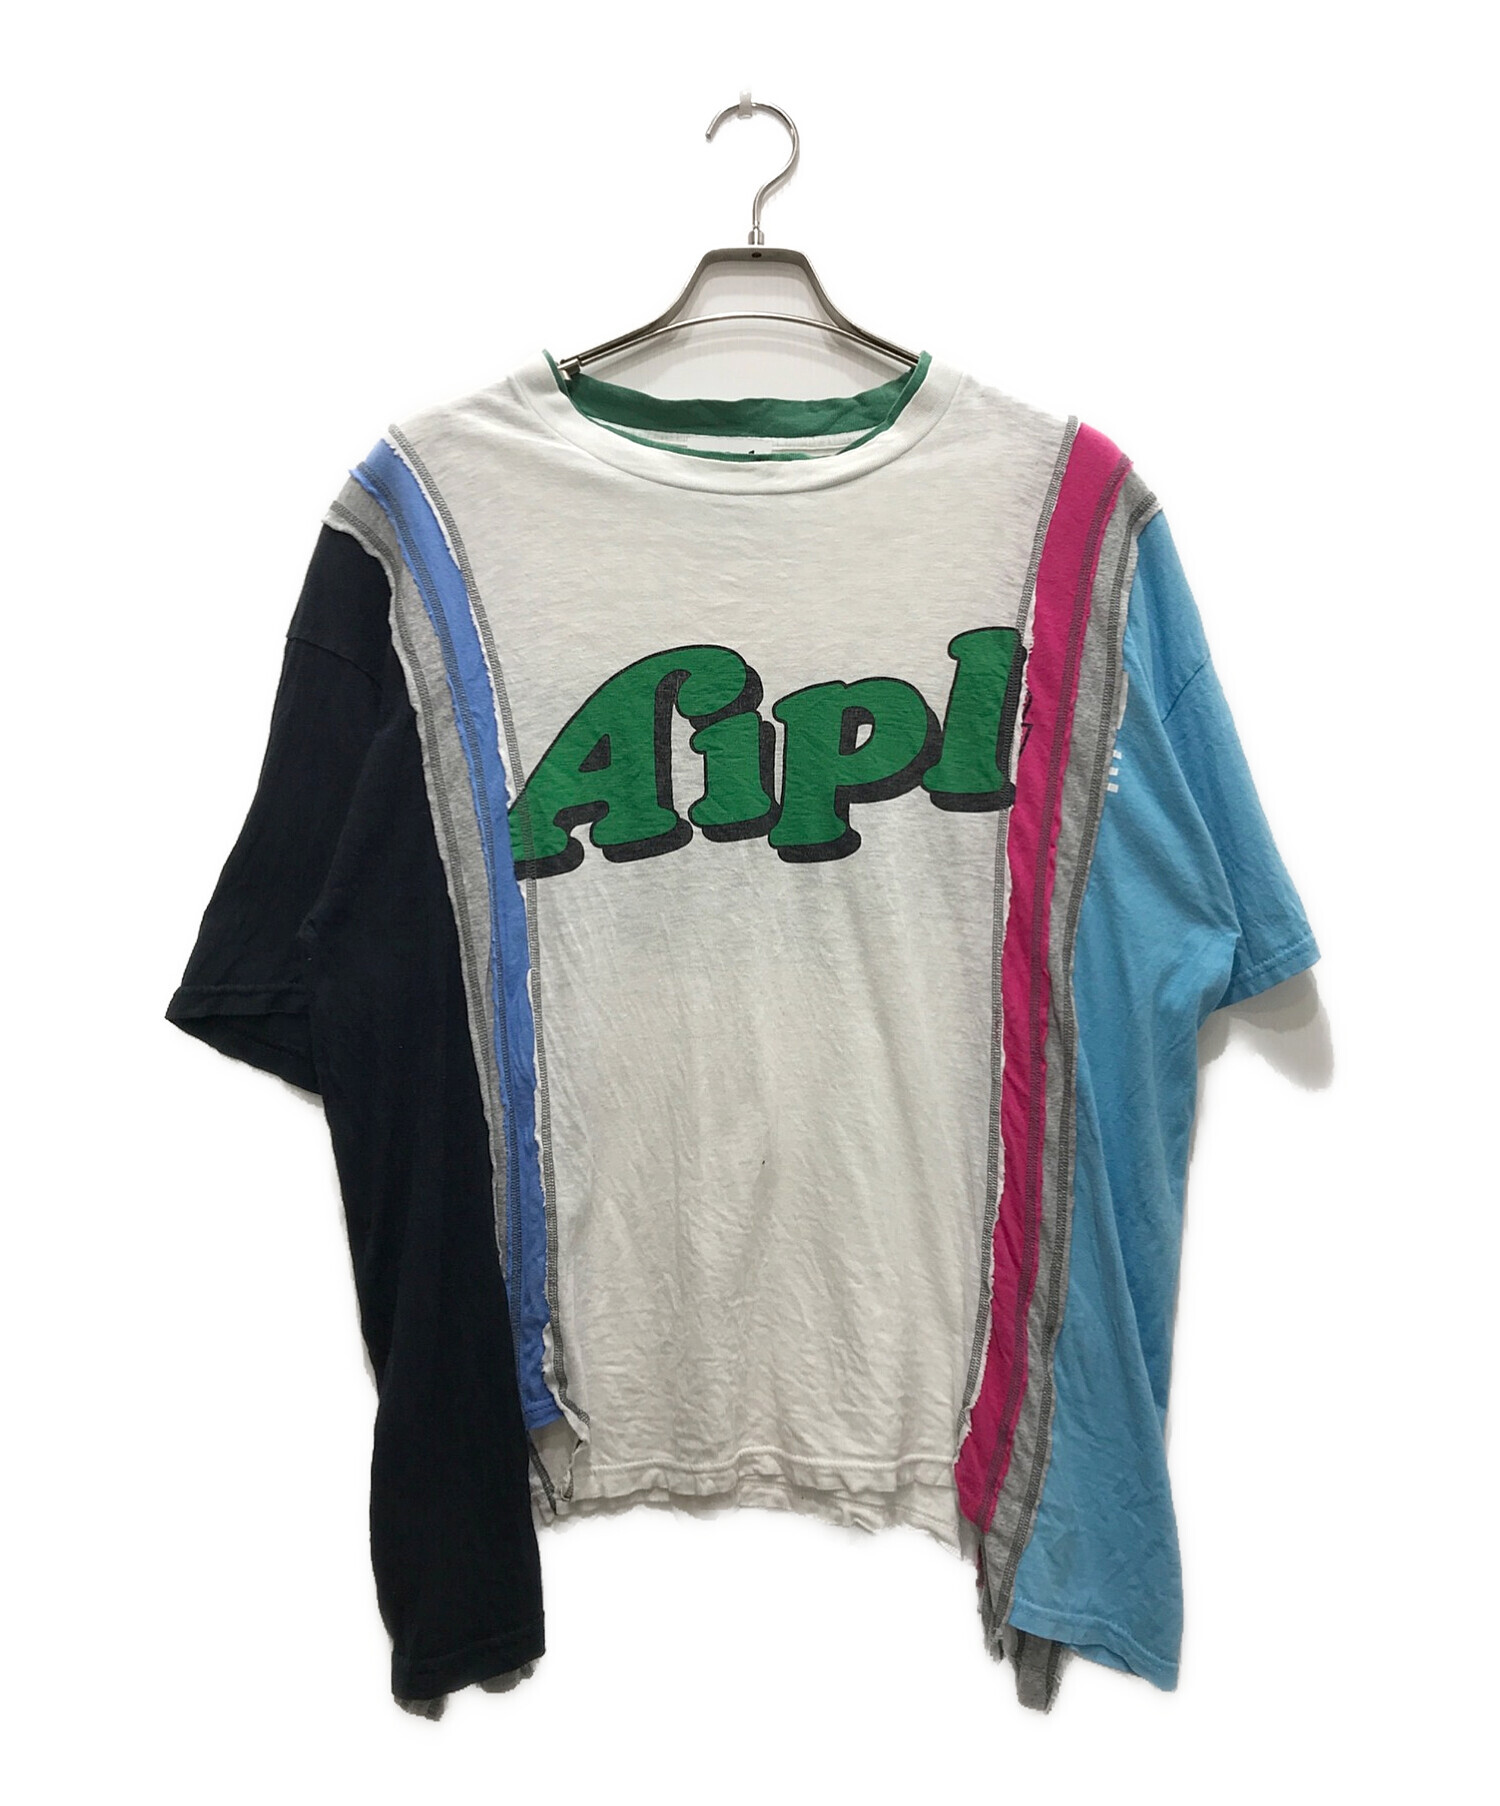 Aipl (エイプル) 再構築リメイクTシャツ ホワイト×グリーン×ブルー サイズ:ONE SIZE